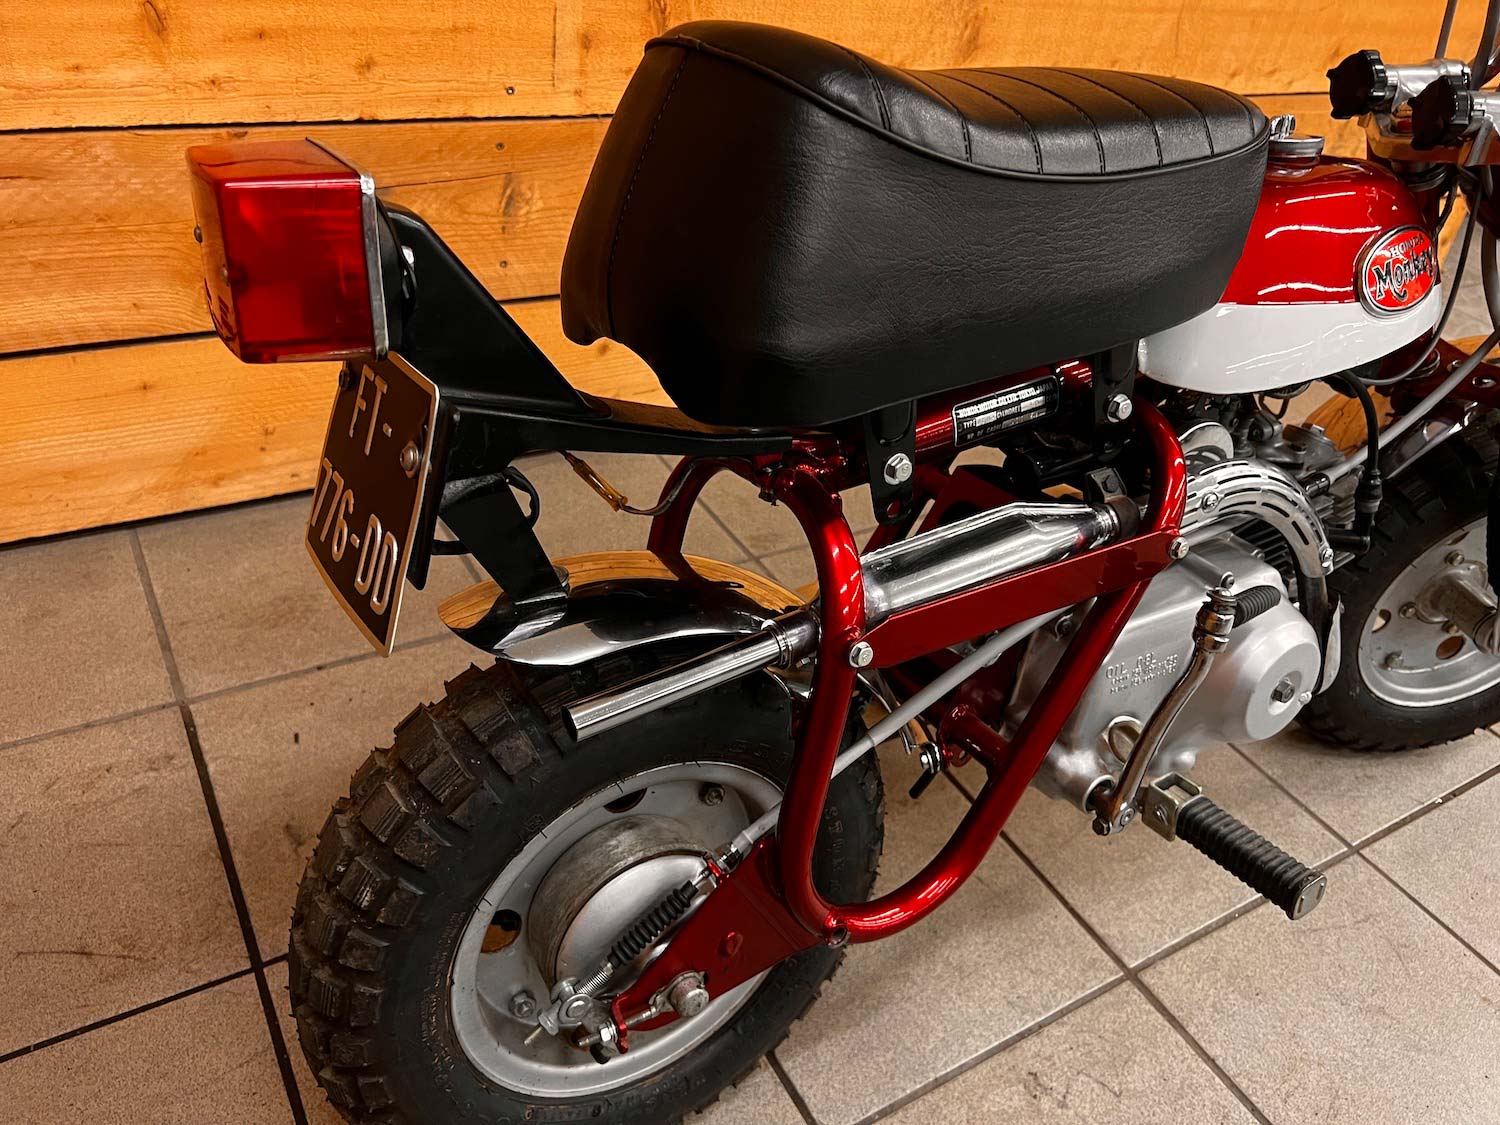 Honda_Monkey_Z50_Cezanne_classic_motorcycle_5-163.jpg